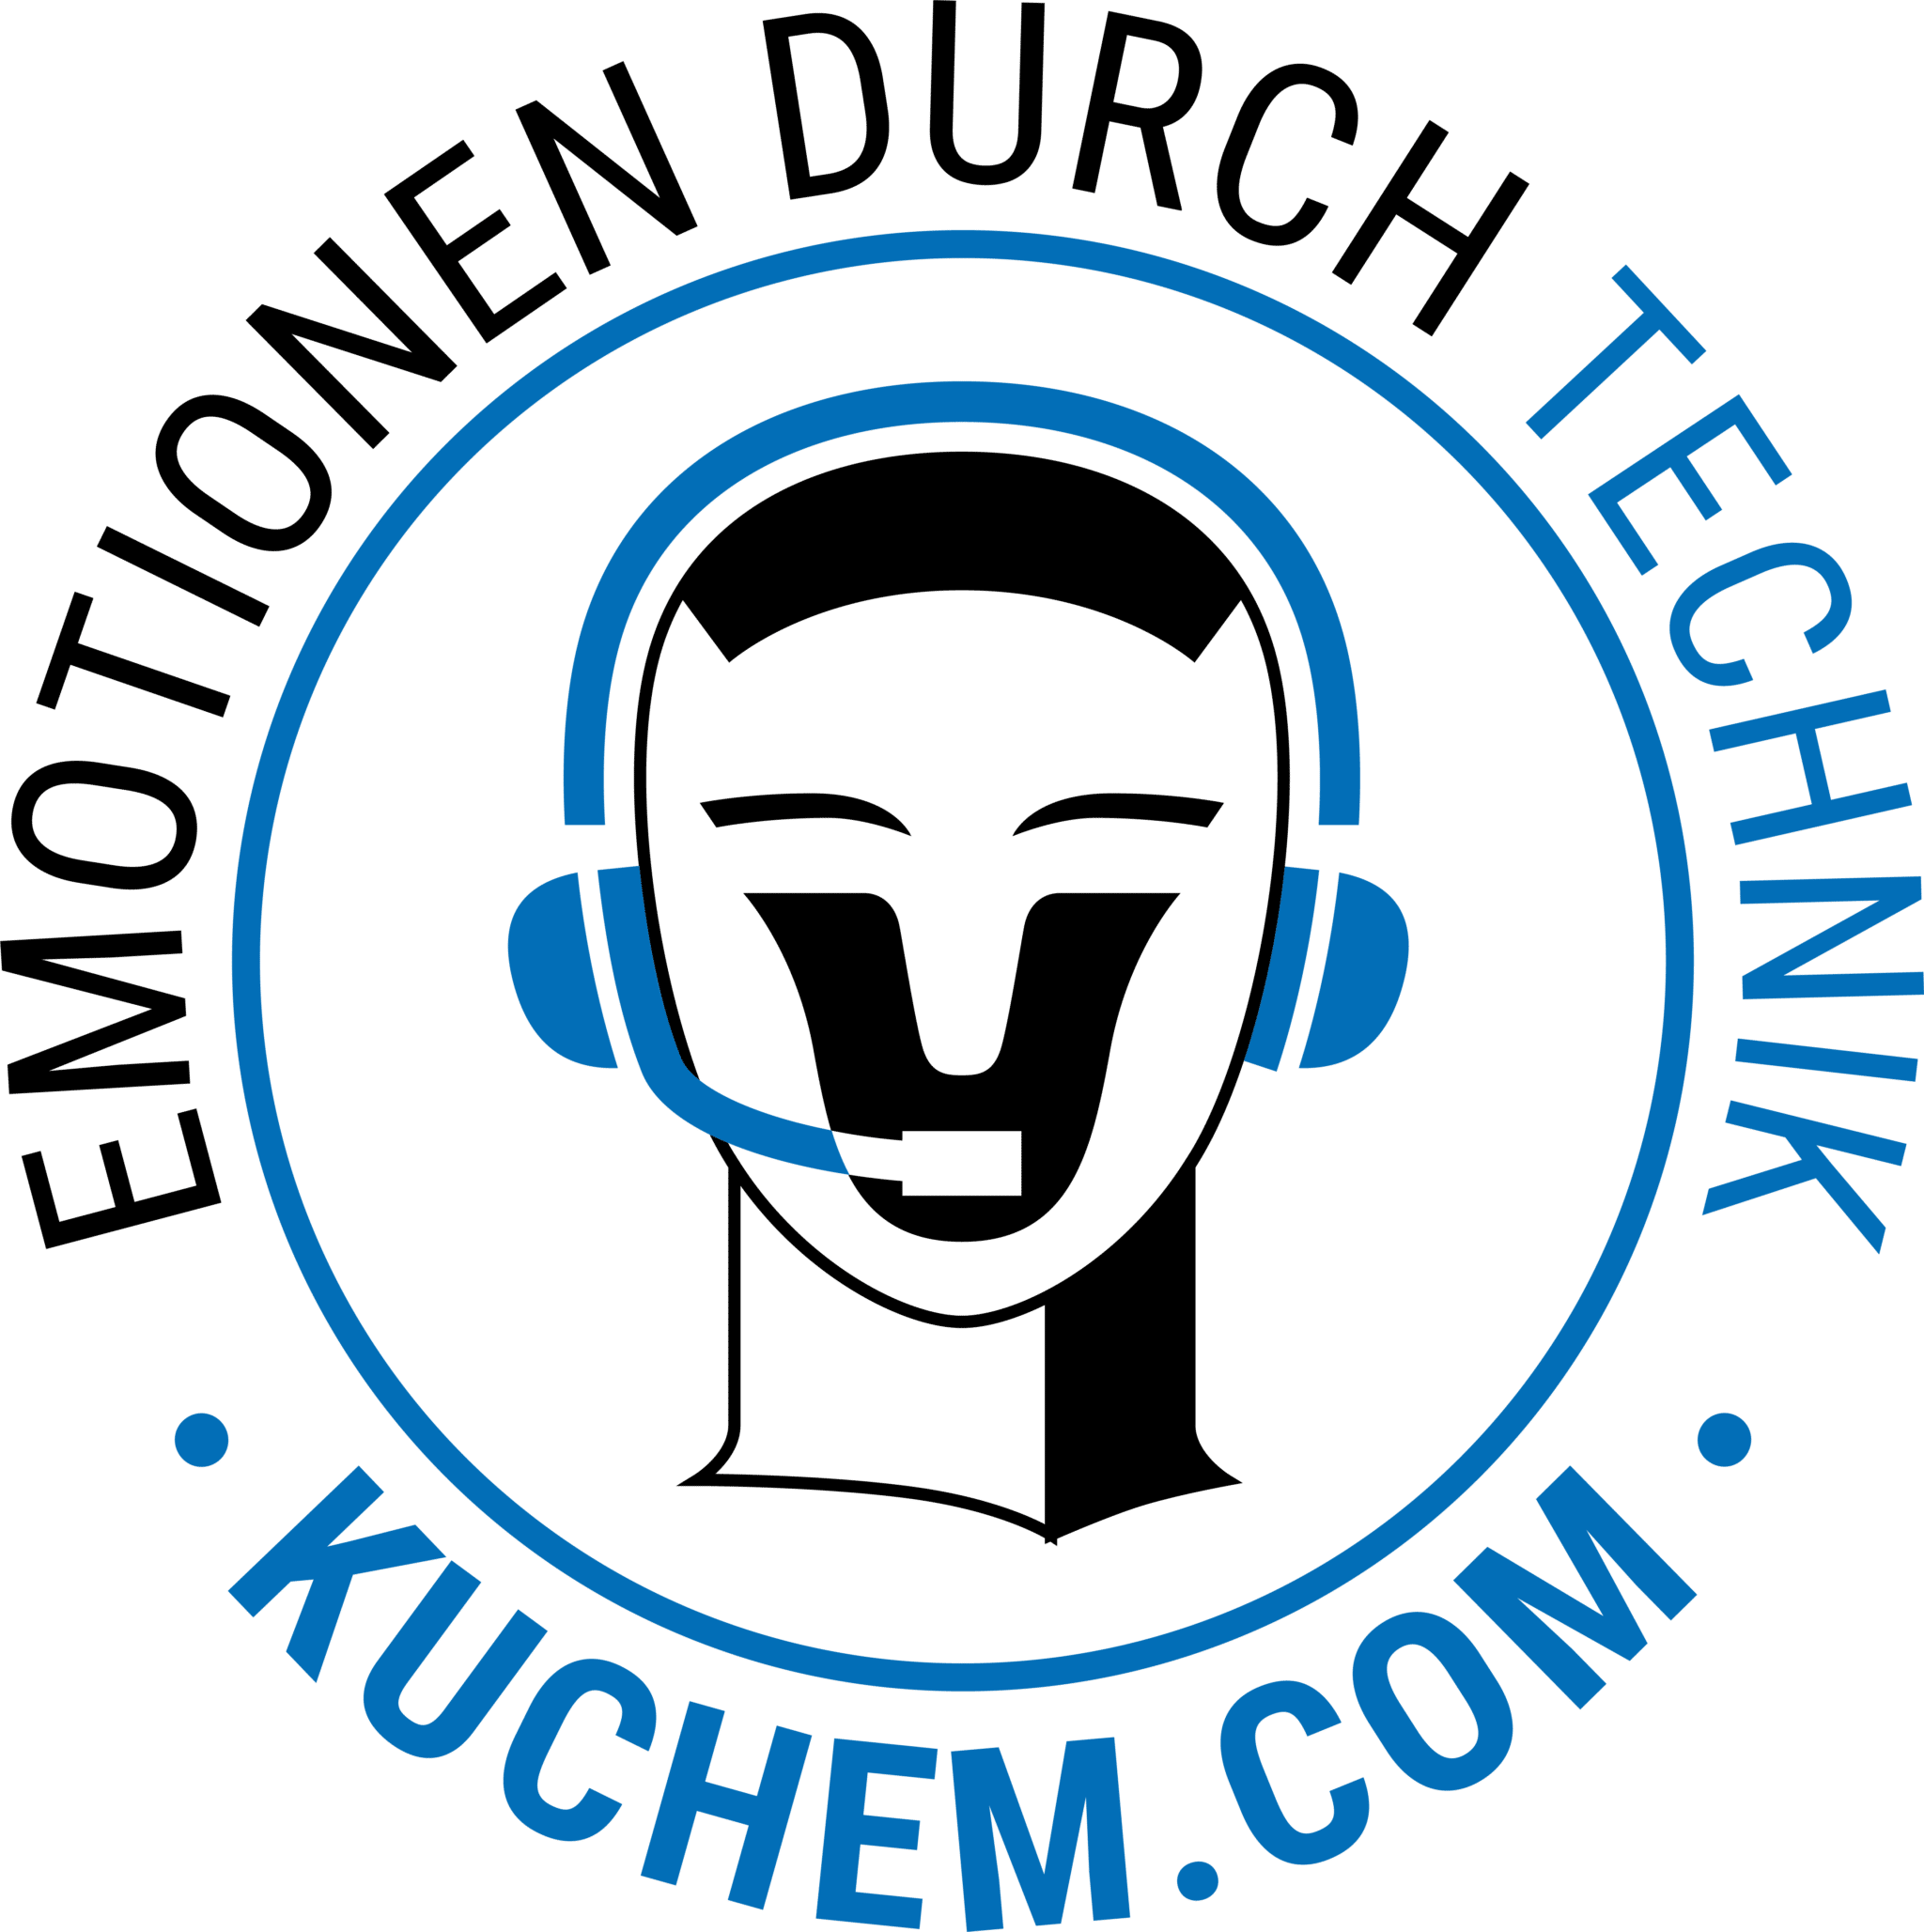 Kuchem Konferenz Technik GmbH & Co. KG